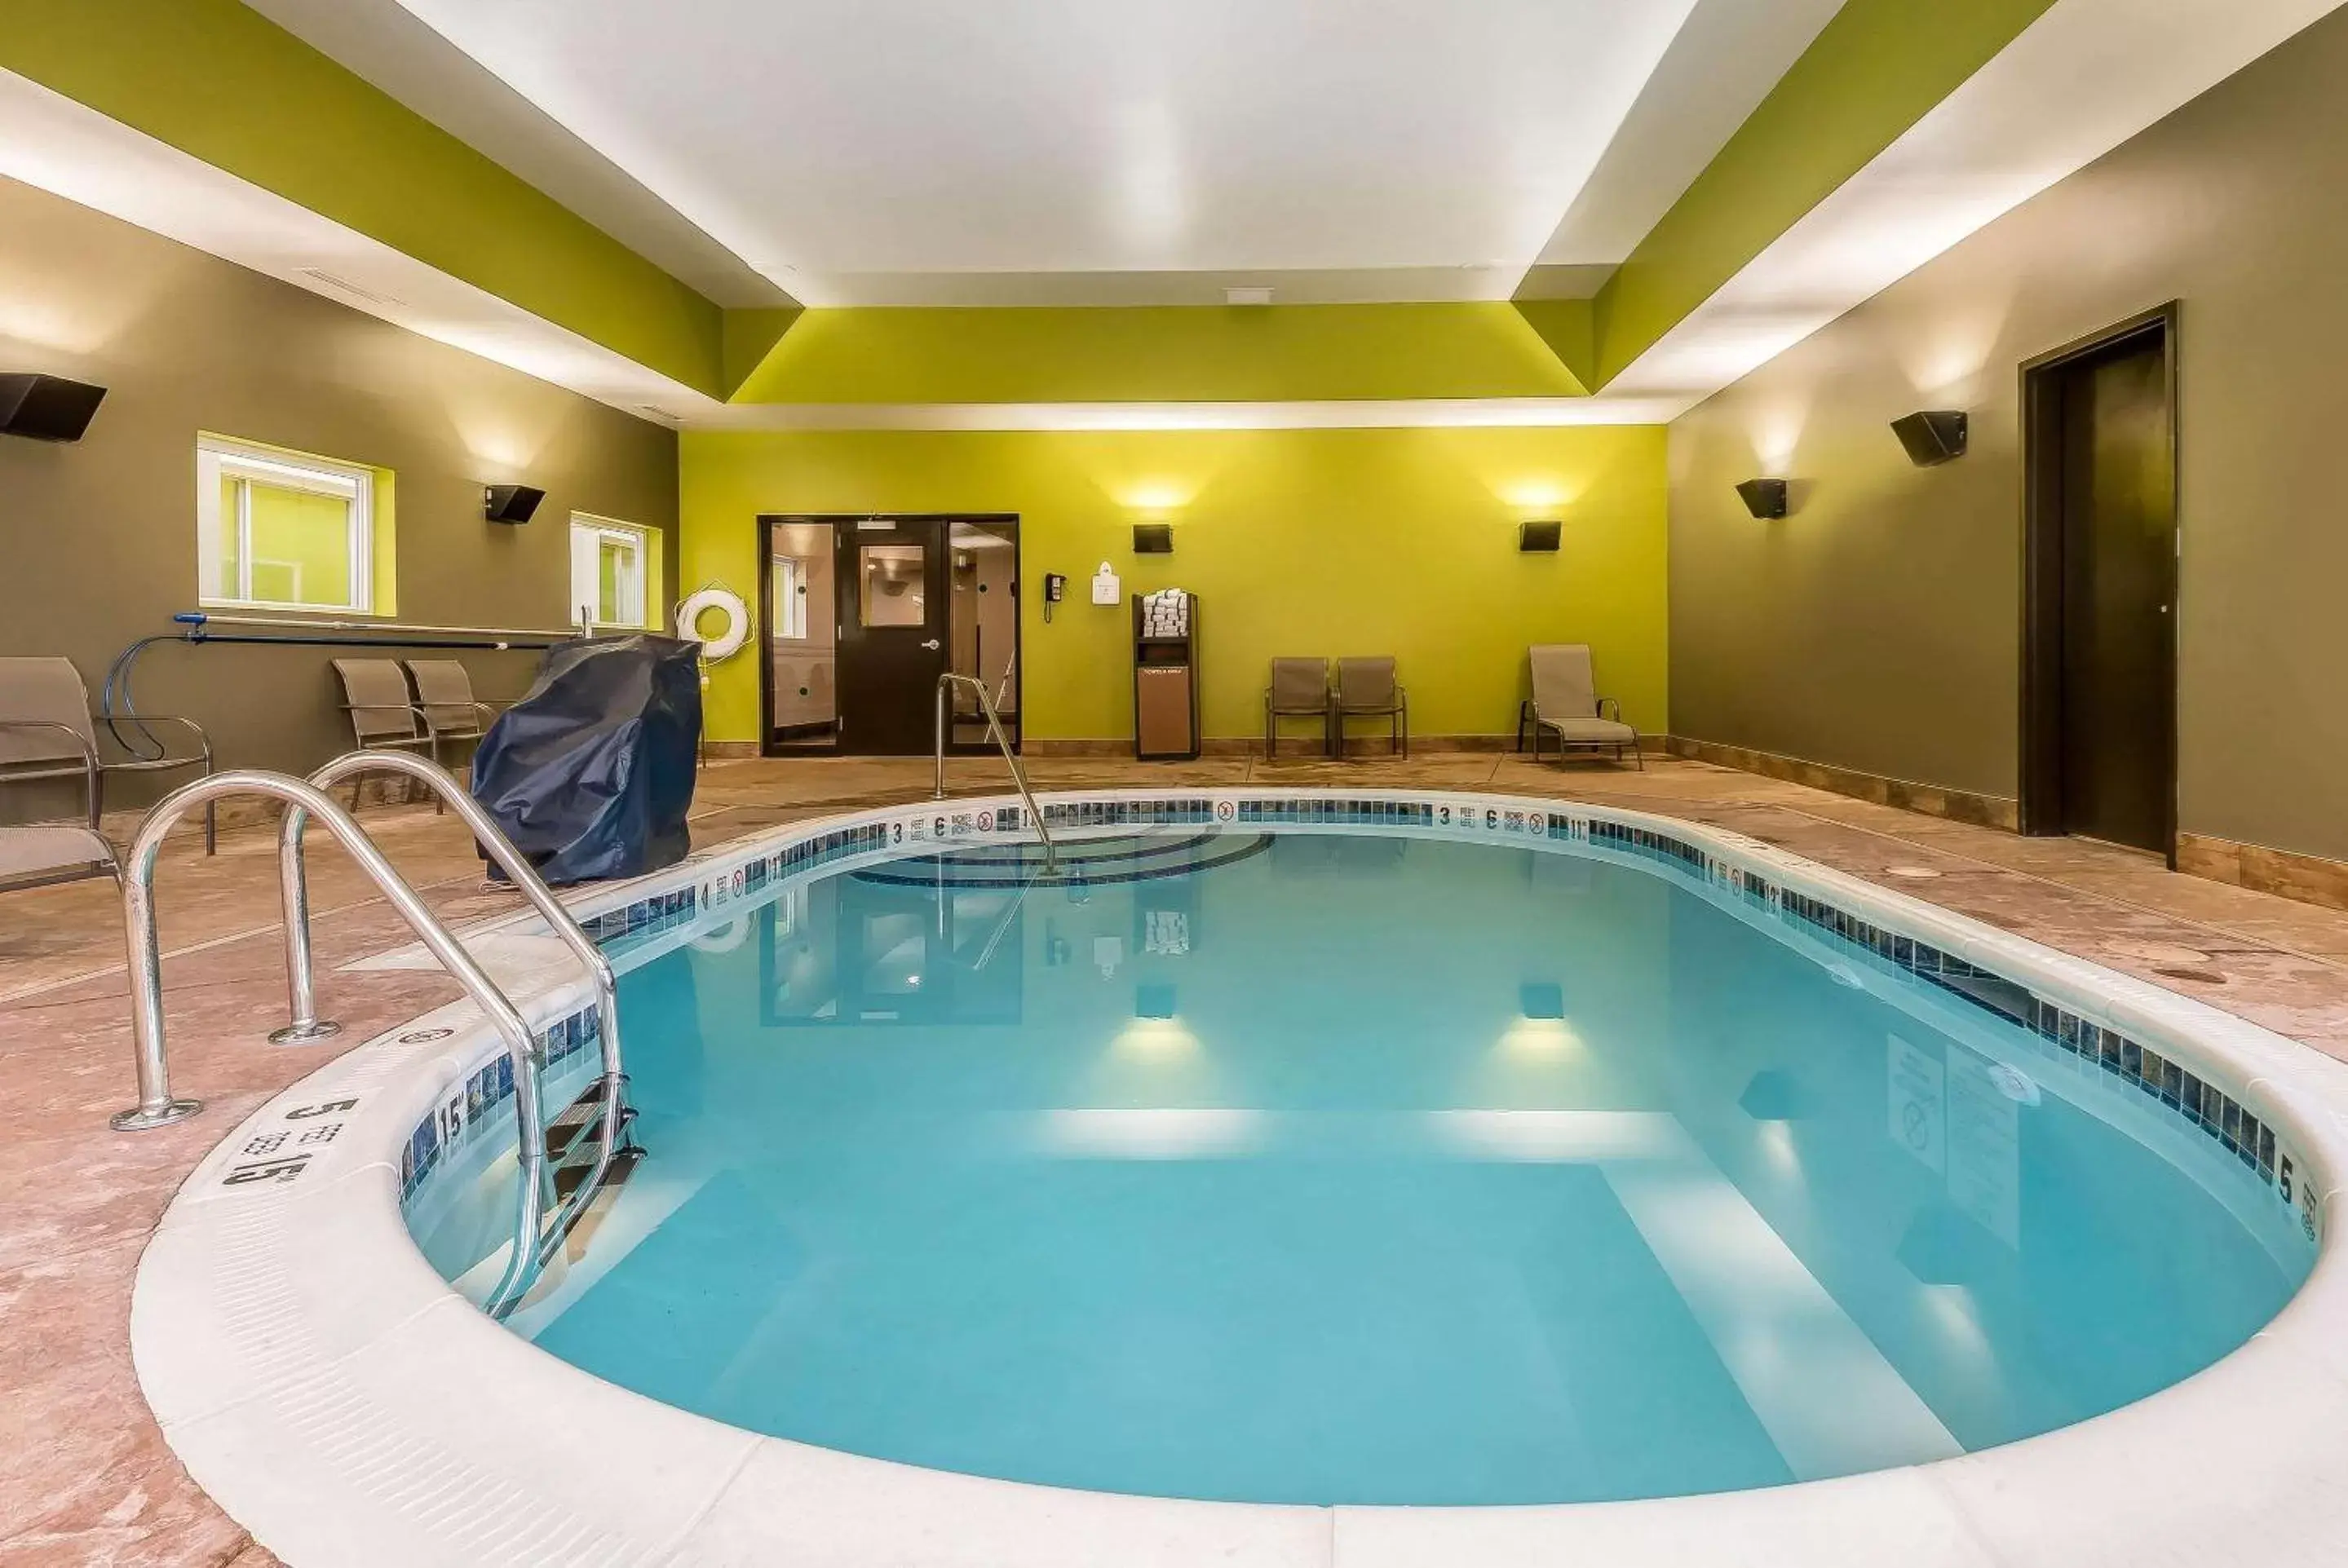 Activities, Swimming Pool in Quality Inn Buffalo/Hamburg, NY